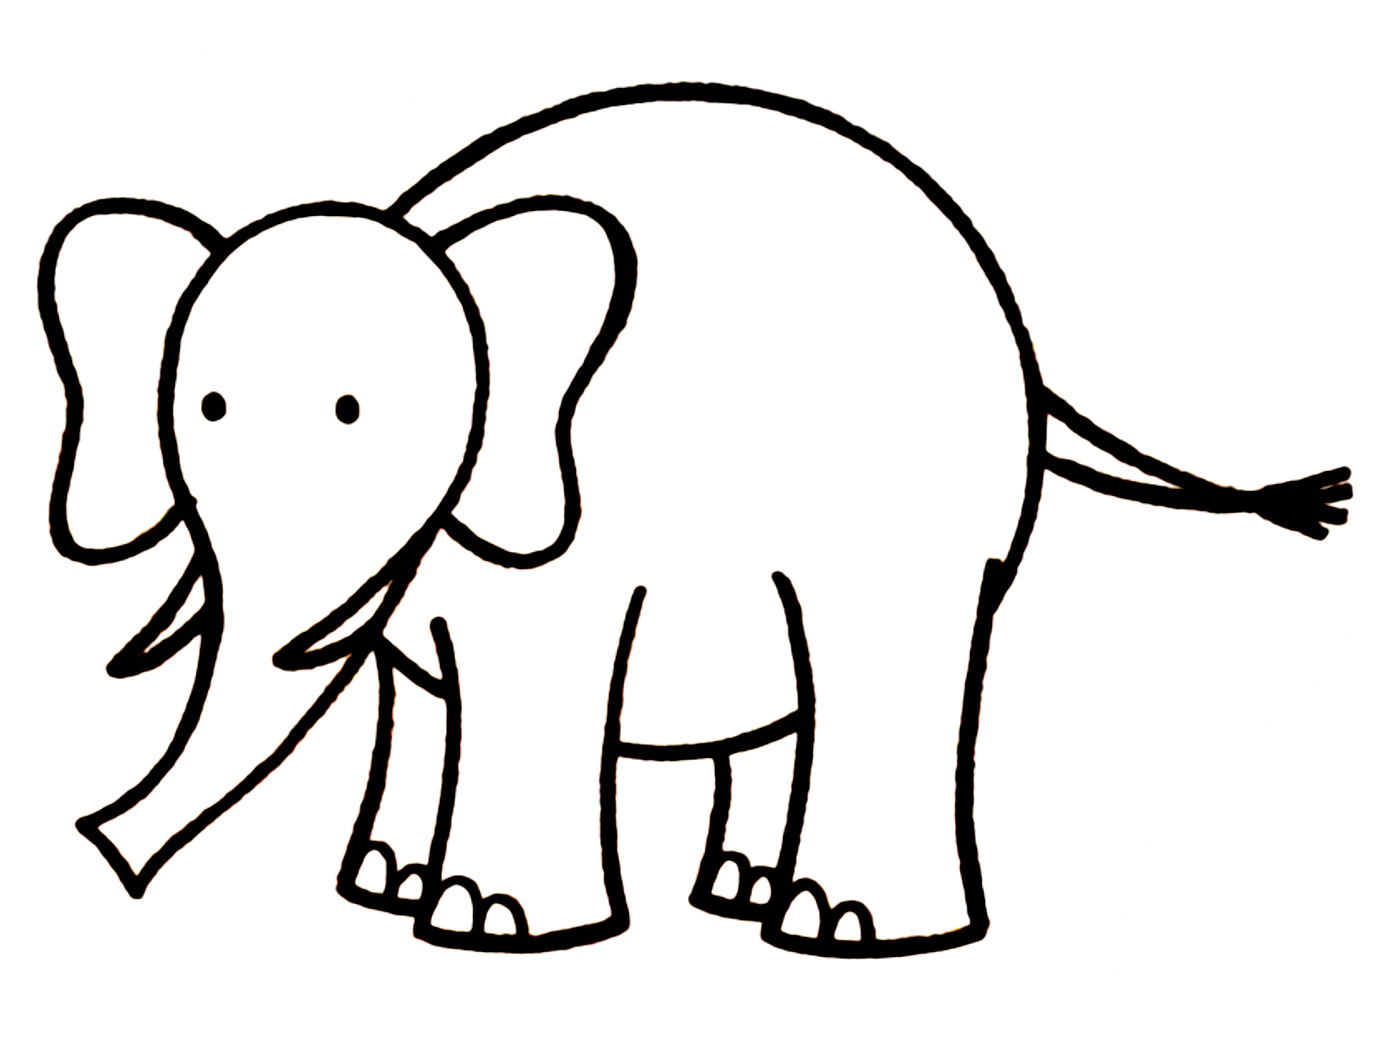 Free elephant drawings.